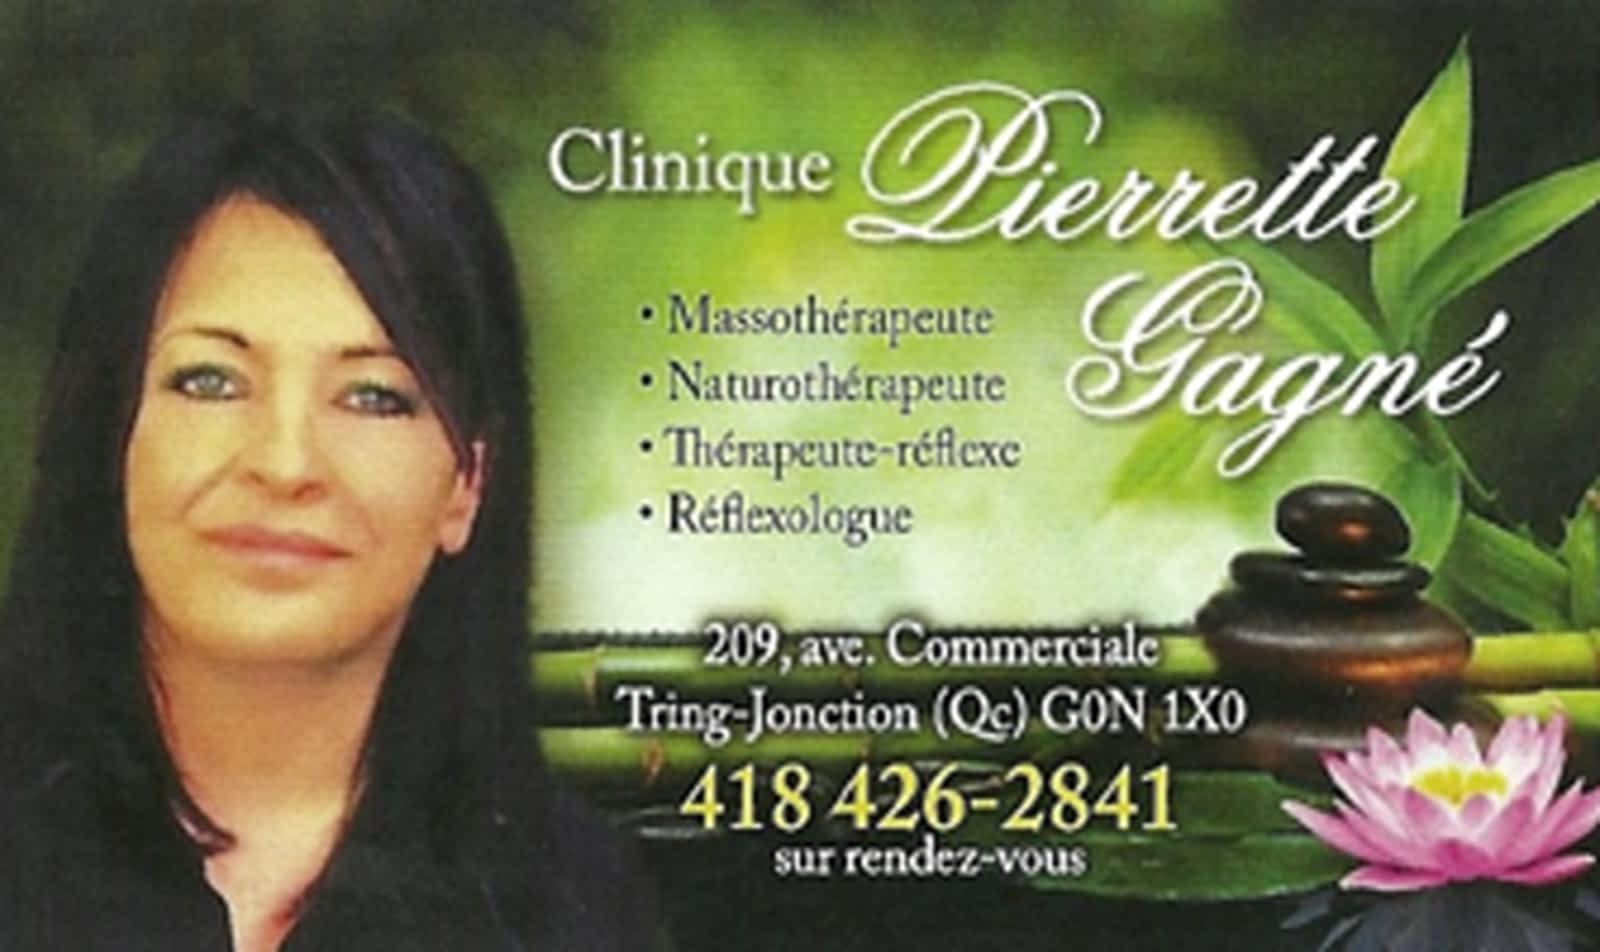 Gagne Pierrette Clinique 209 Av. Commerciale, Tring-Jonction Quebec G0N 1X0